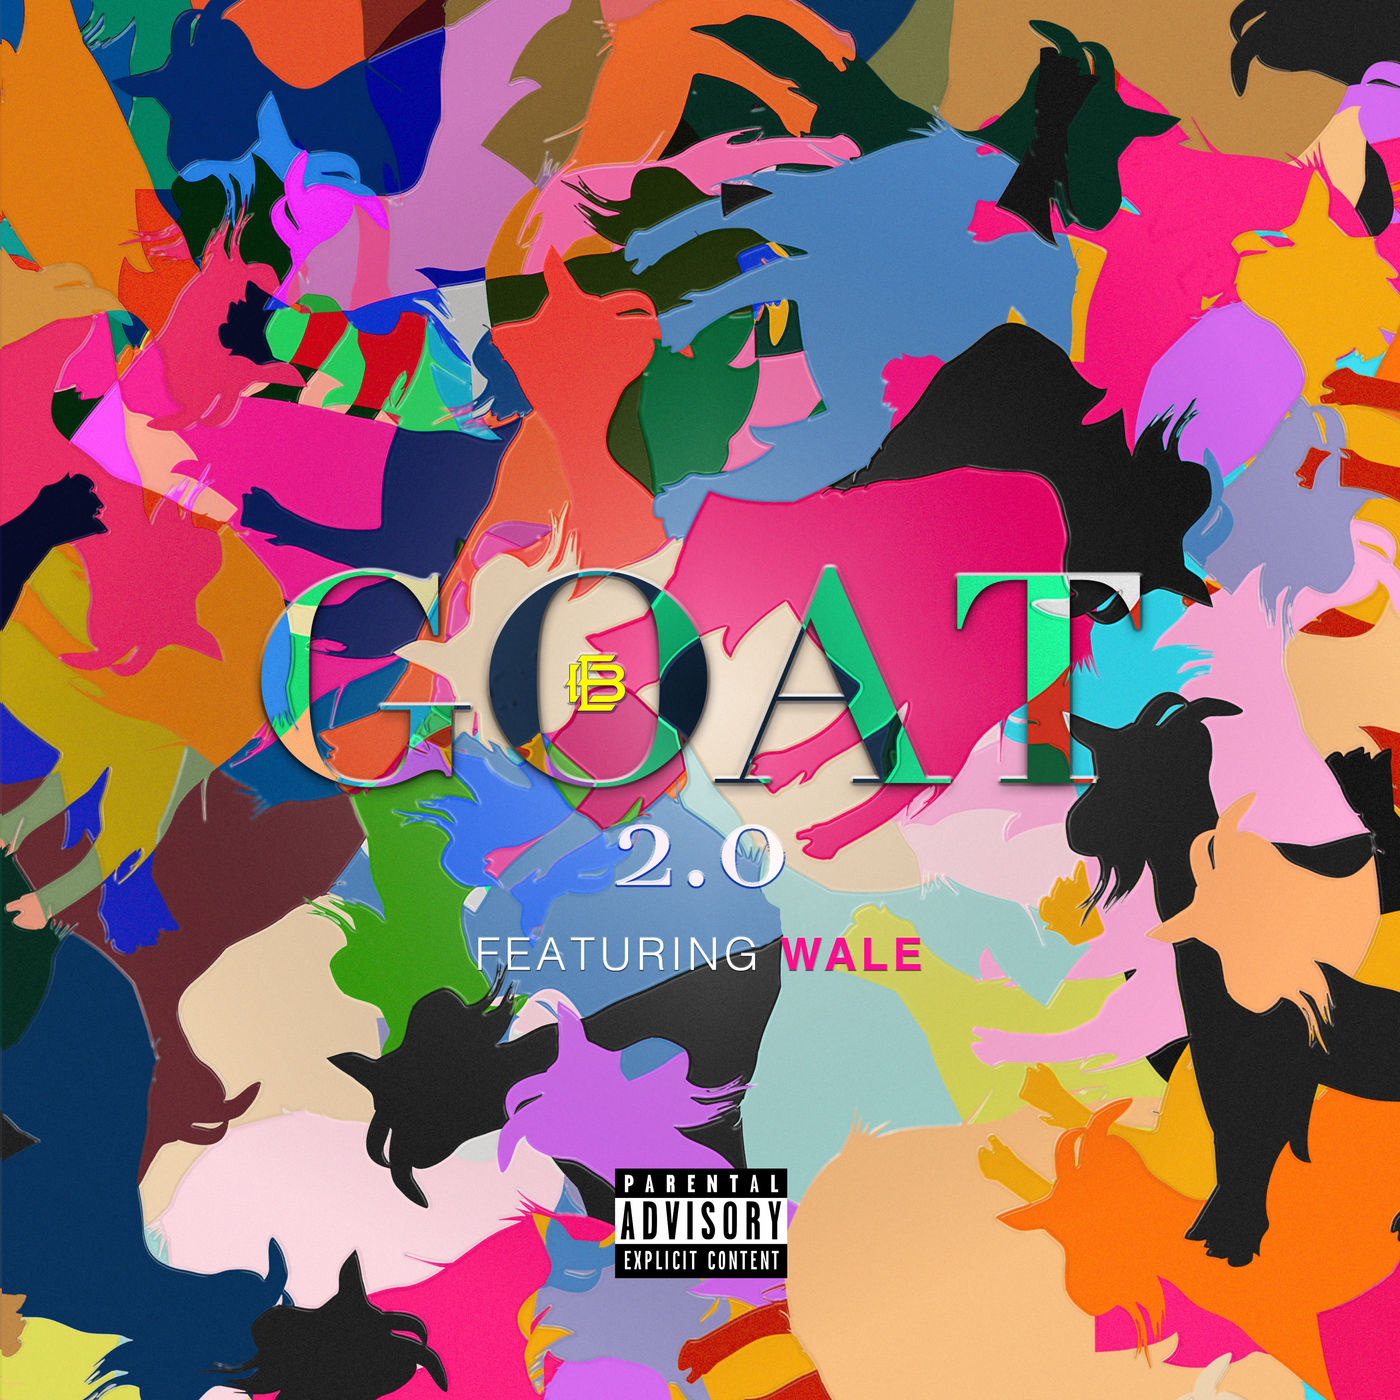 New Music: Eric Bellinger – “Goat 2.0” Feat. Wale [LISTEN]